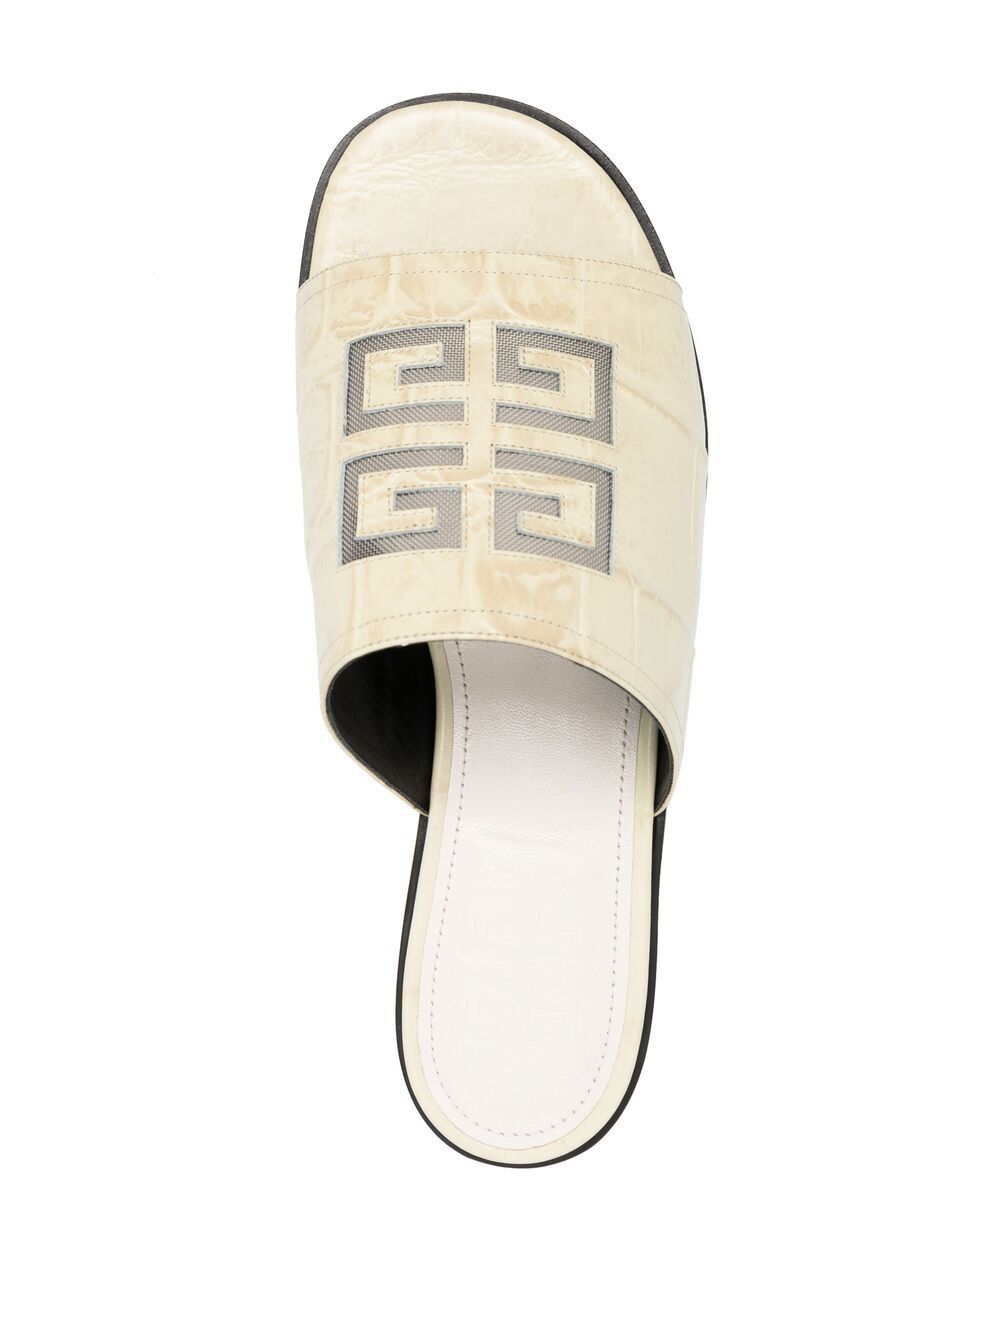 фото Givenchy 4g-logo flat sandals